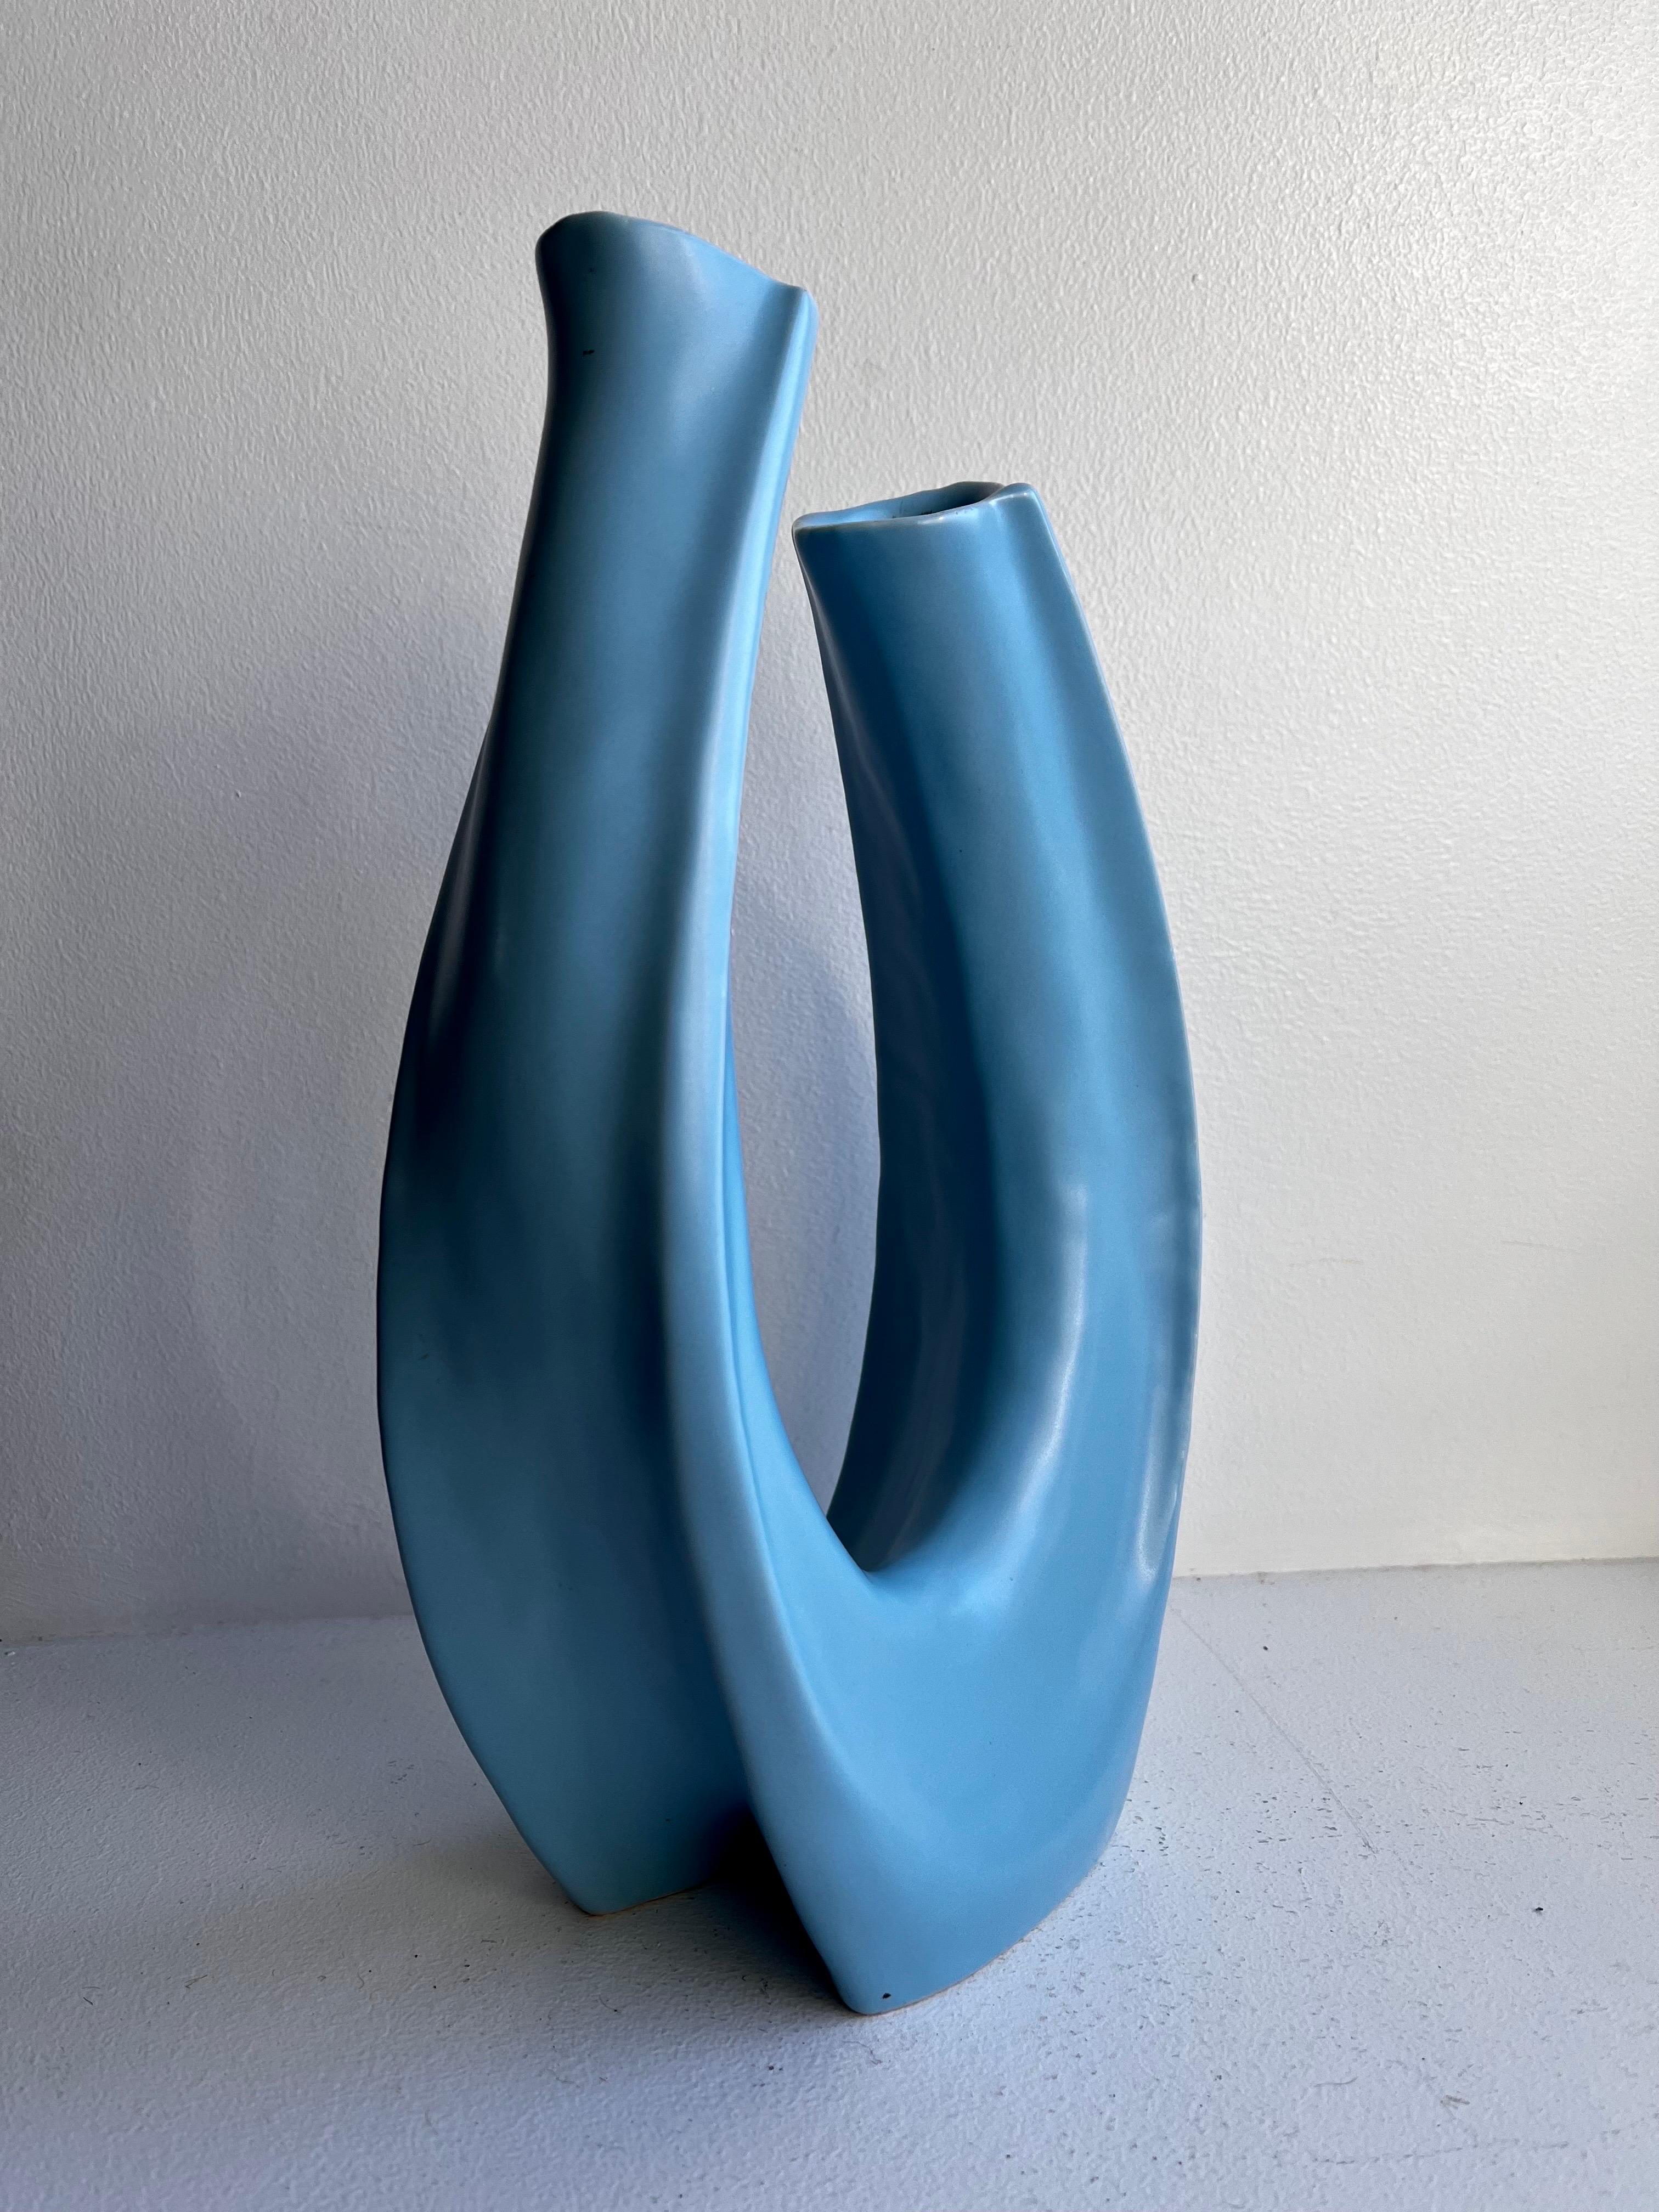 Sculptural Ikebana Ceramic Vase
circa 1965
double 